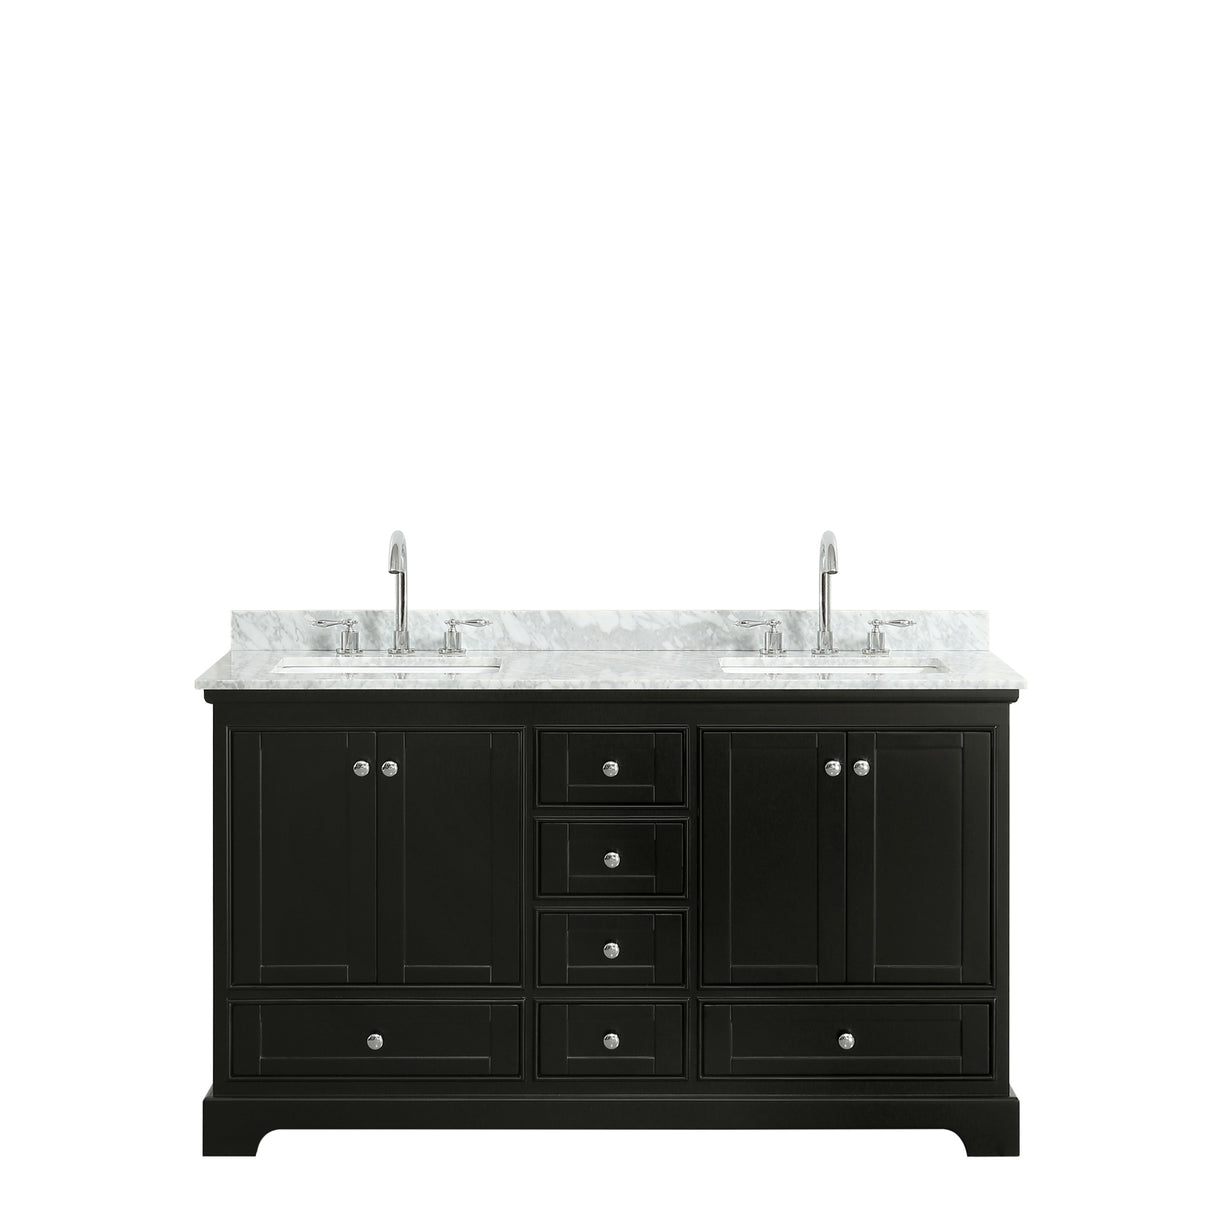 Deborah 60 Inch Double Bathroom Vanity in Dark Espresso White Carrara Marble Countertop Undermount Square Sinks and No Mirrors